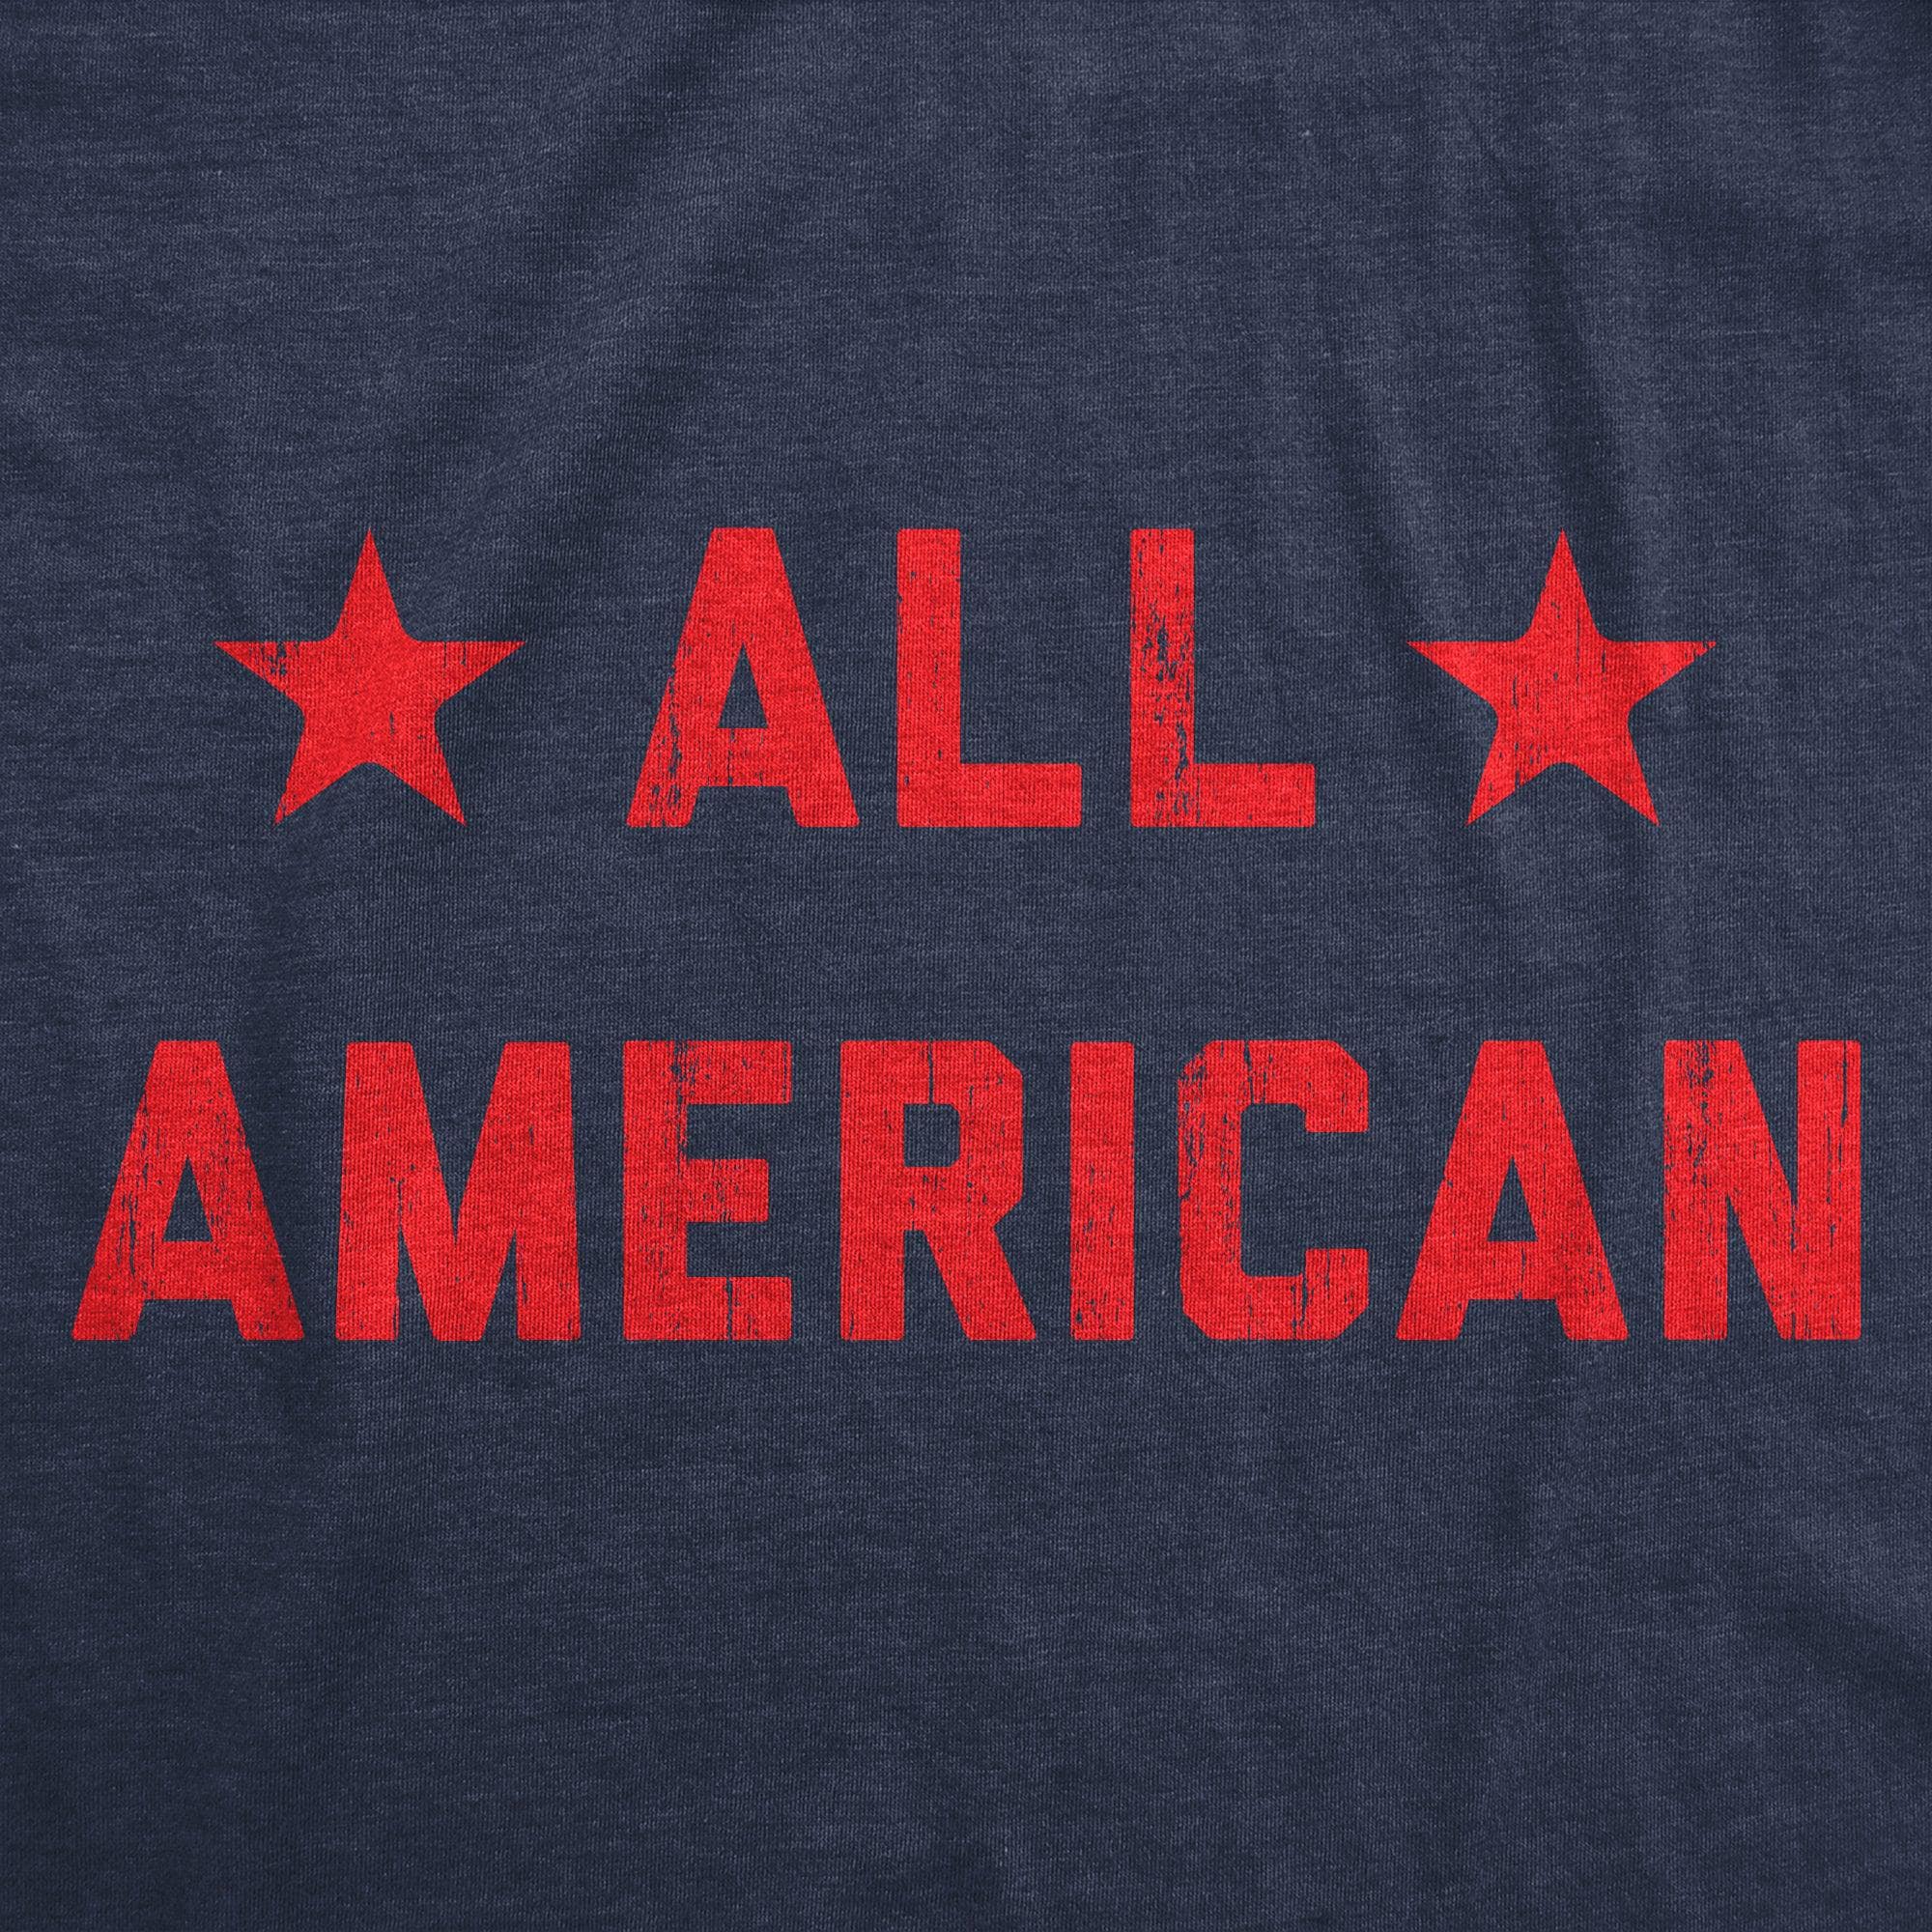 All American Women's Tshirt  -  Crazy Dog T-Shirts